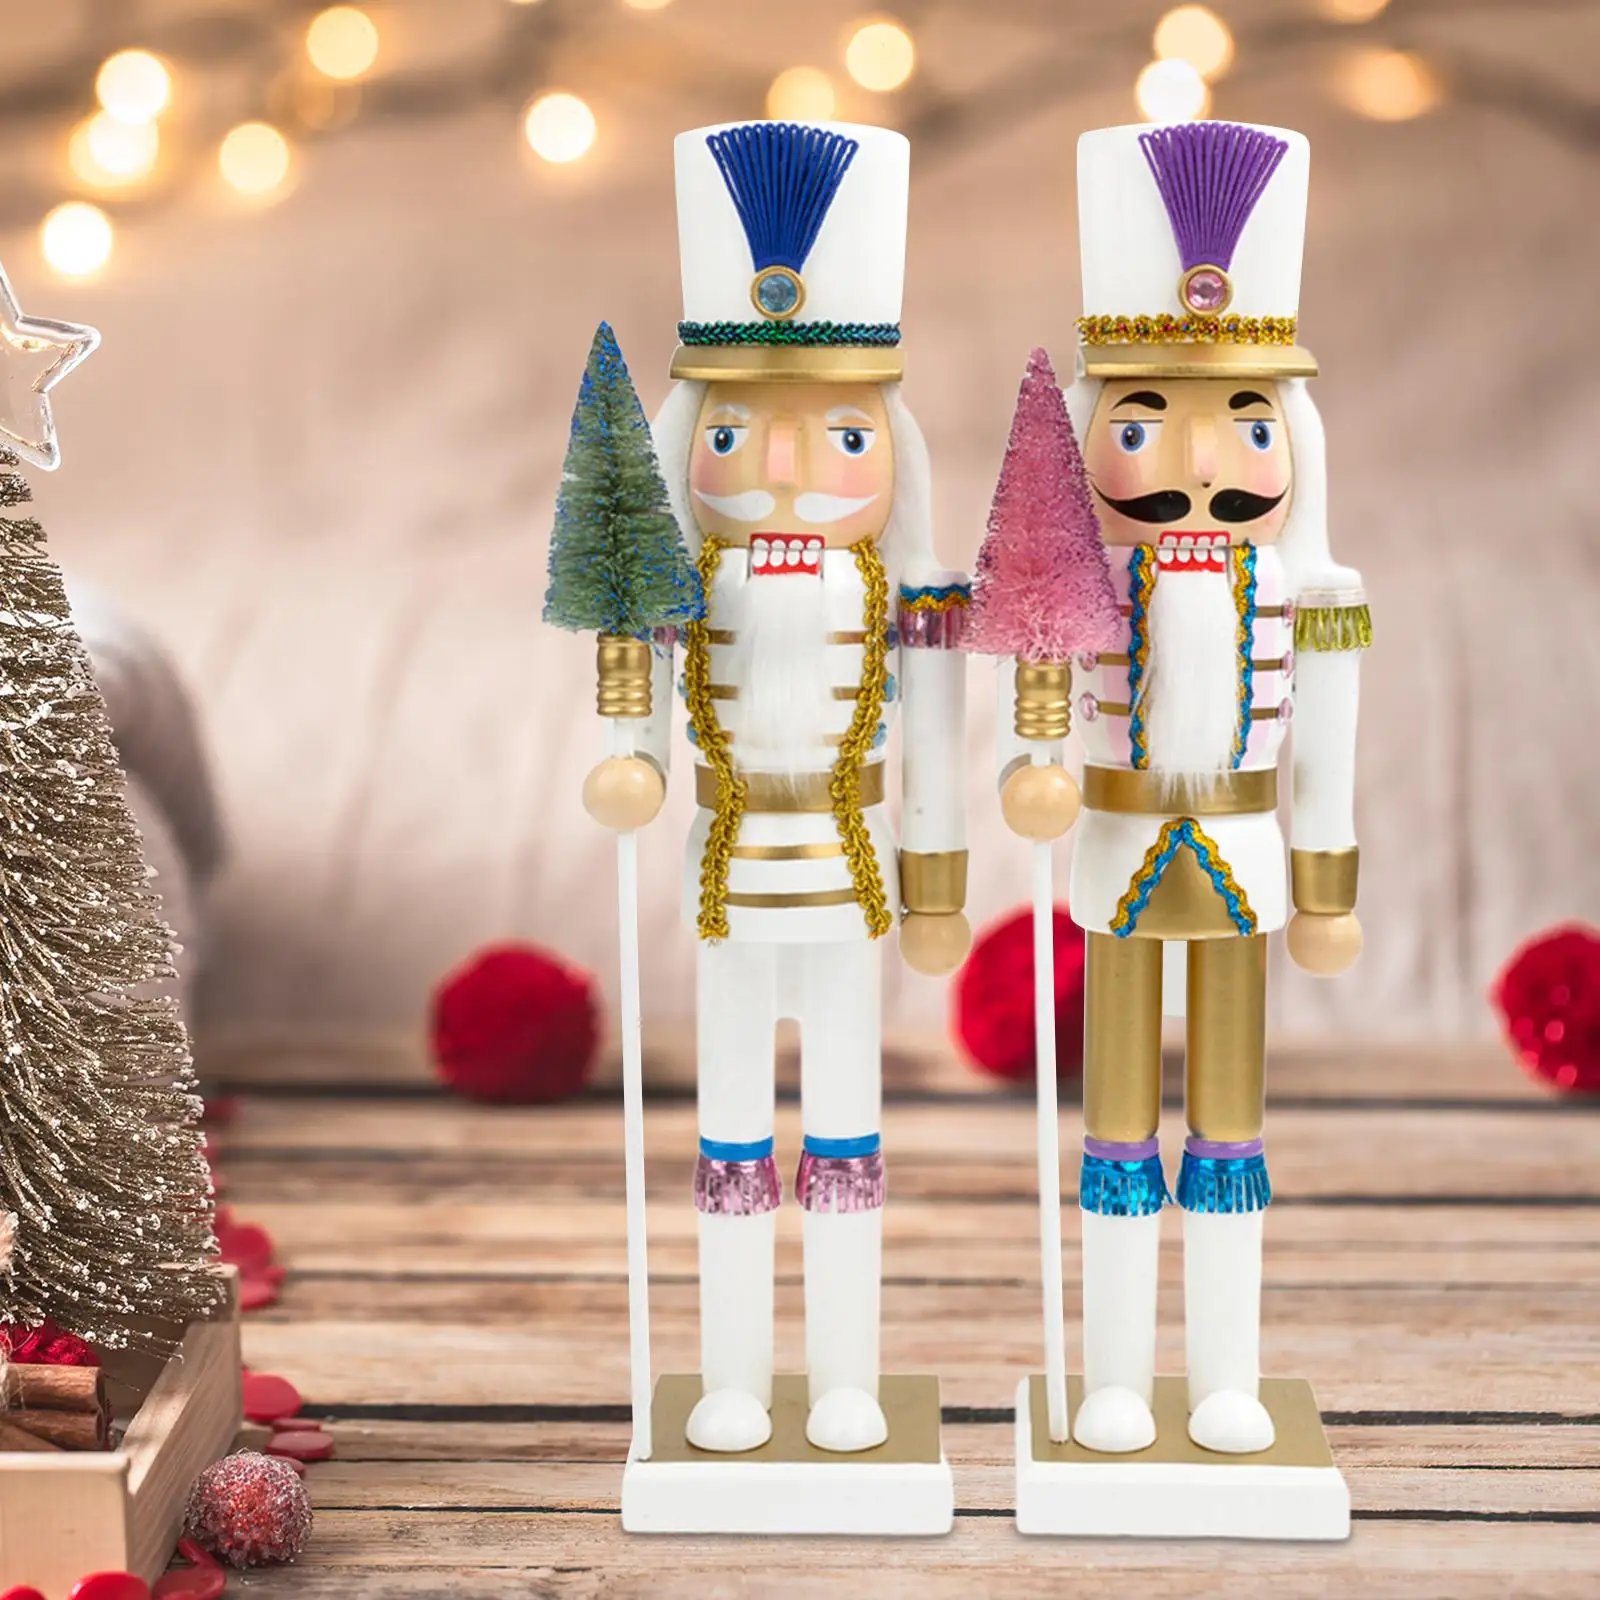 2 Pieces Christmas Nutcracker Ornament Party Favors Decor Hand Painted Doll